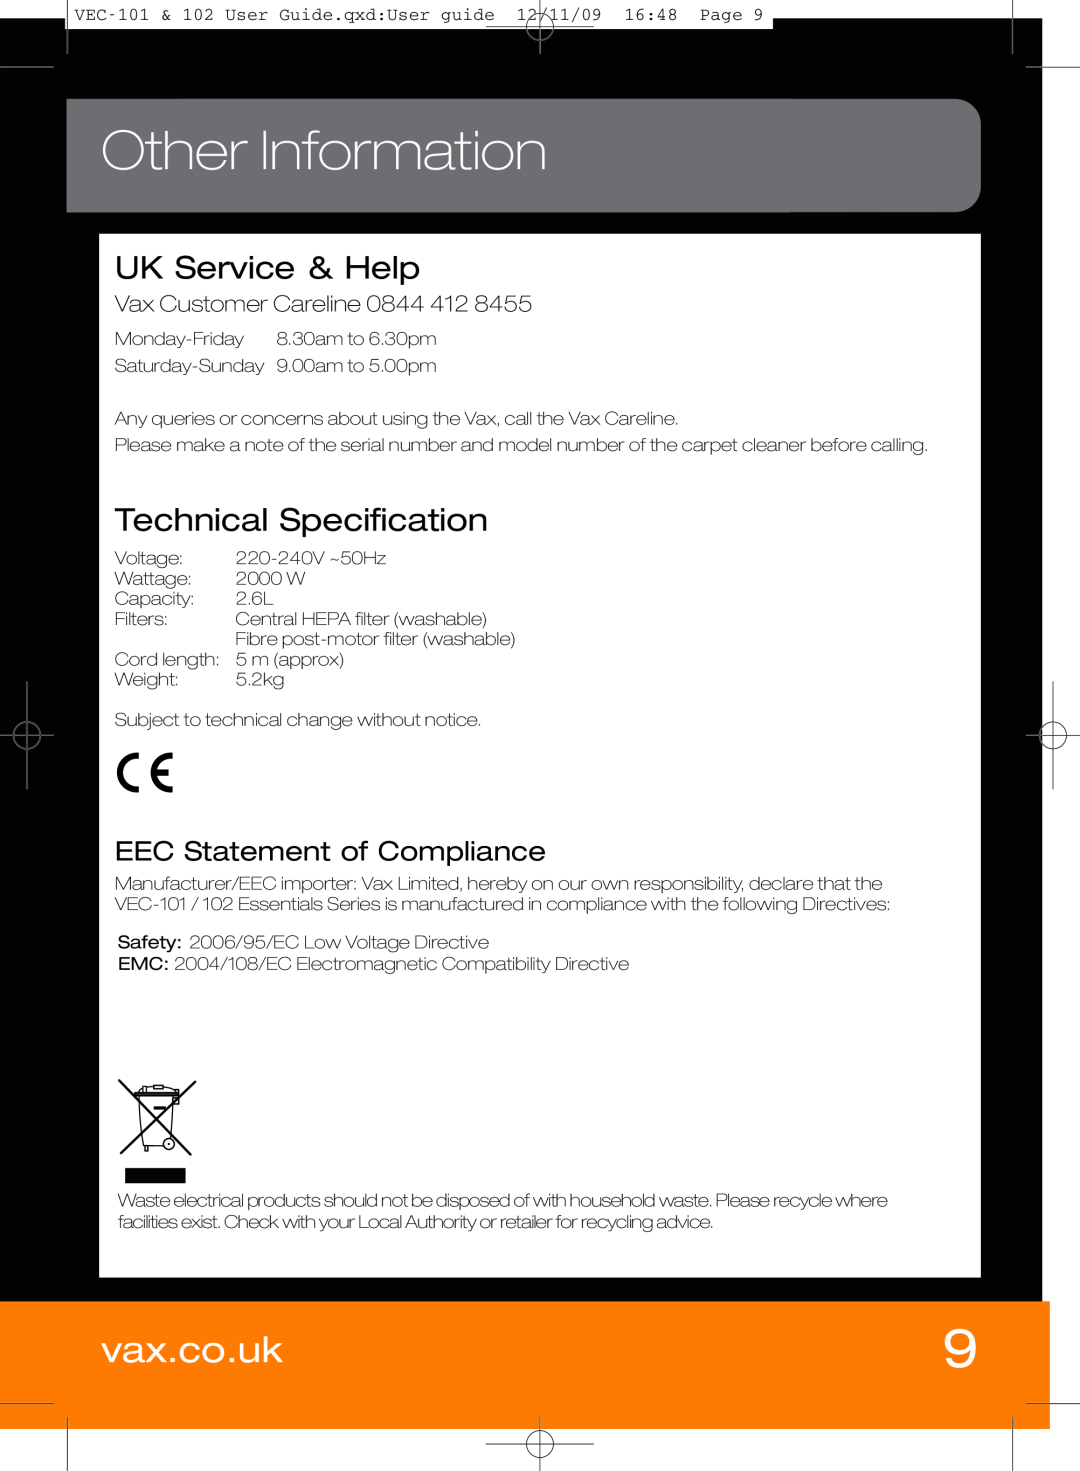 Vizio VEC-101 manual Other Information, EEC Statement of Compliance, Vax Customer Careline, vax.co.uk, UK Service & Help 